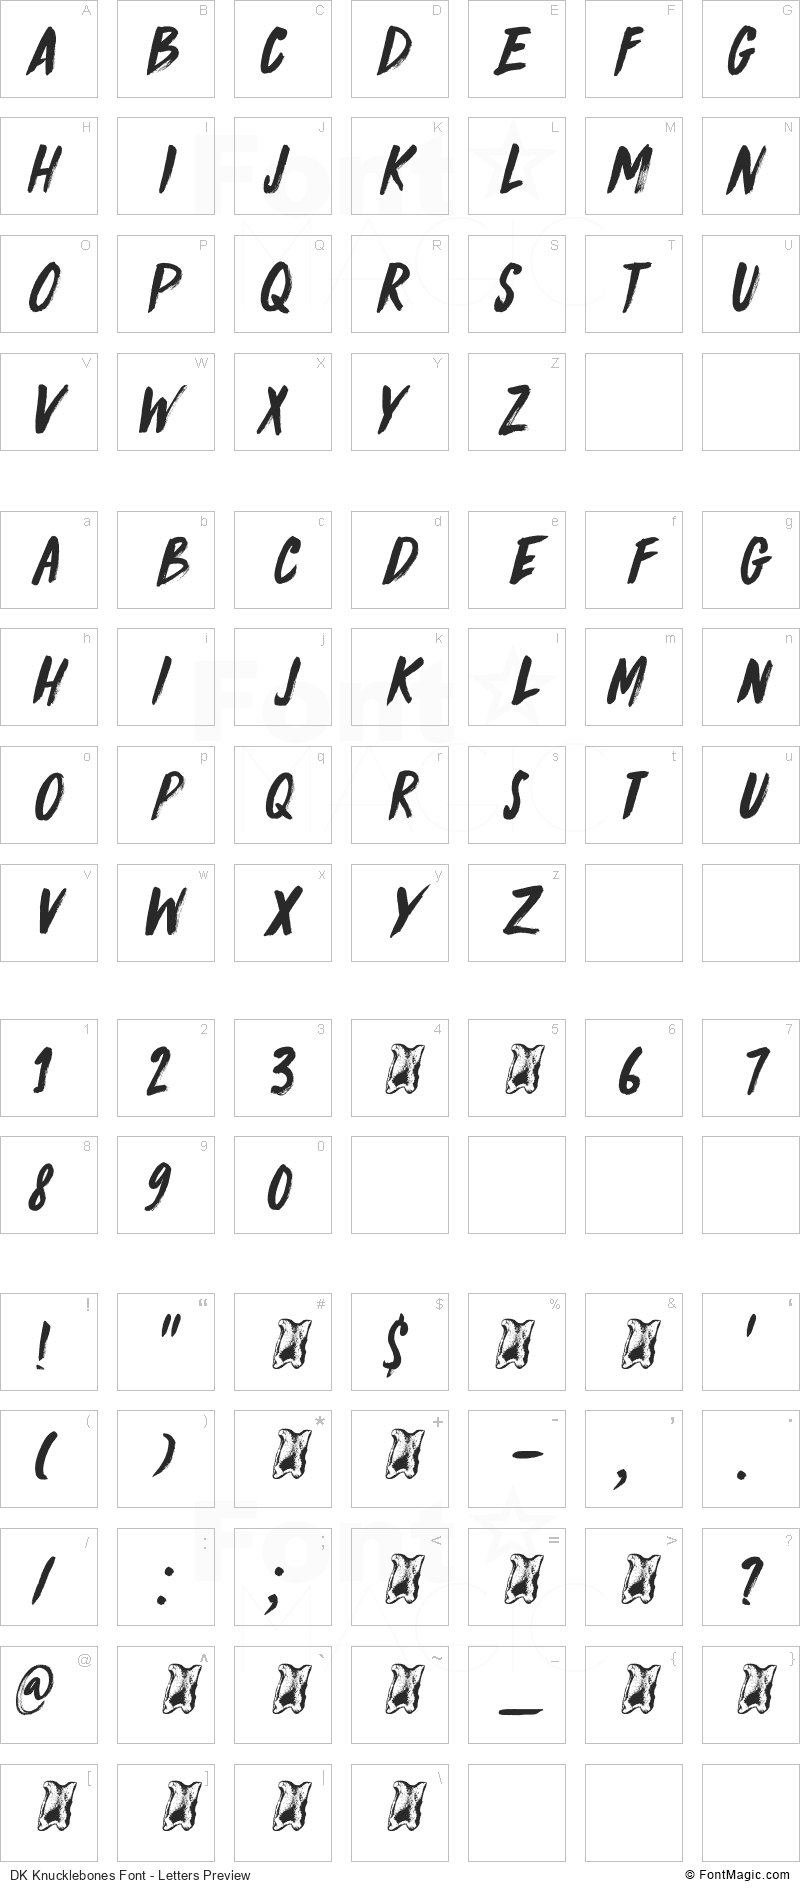 DK Knucklebones Font - All Latters Preview Chart